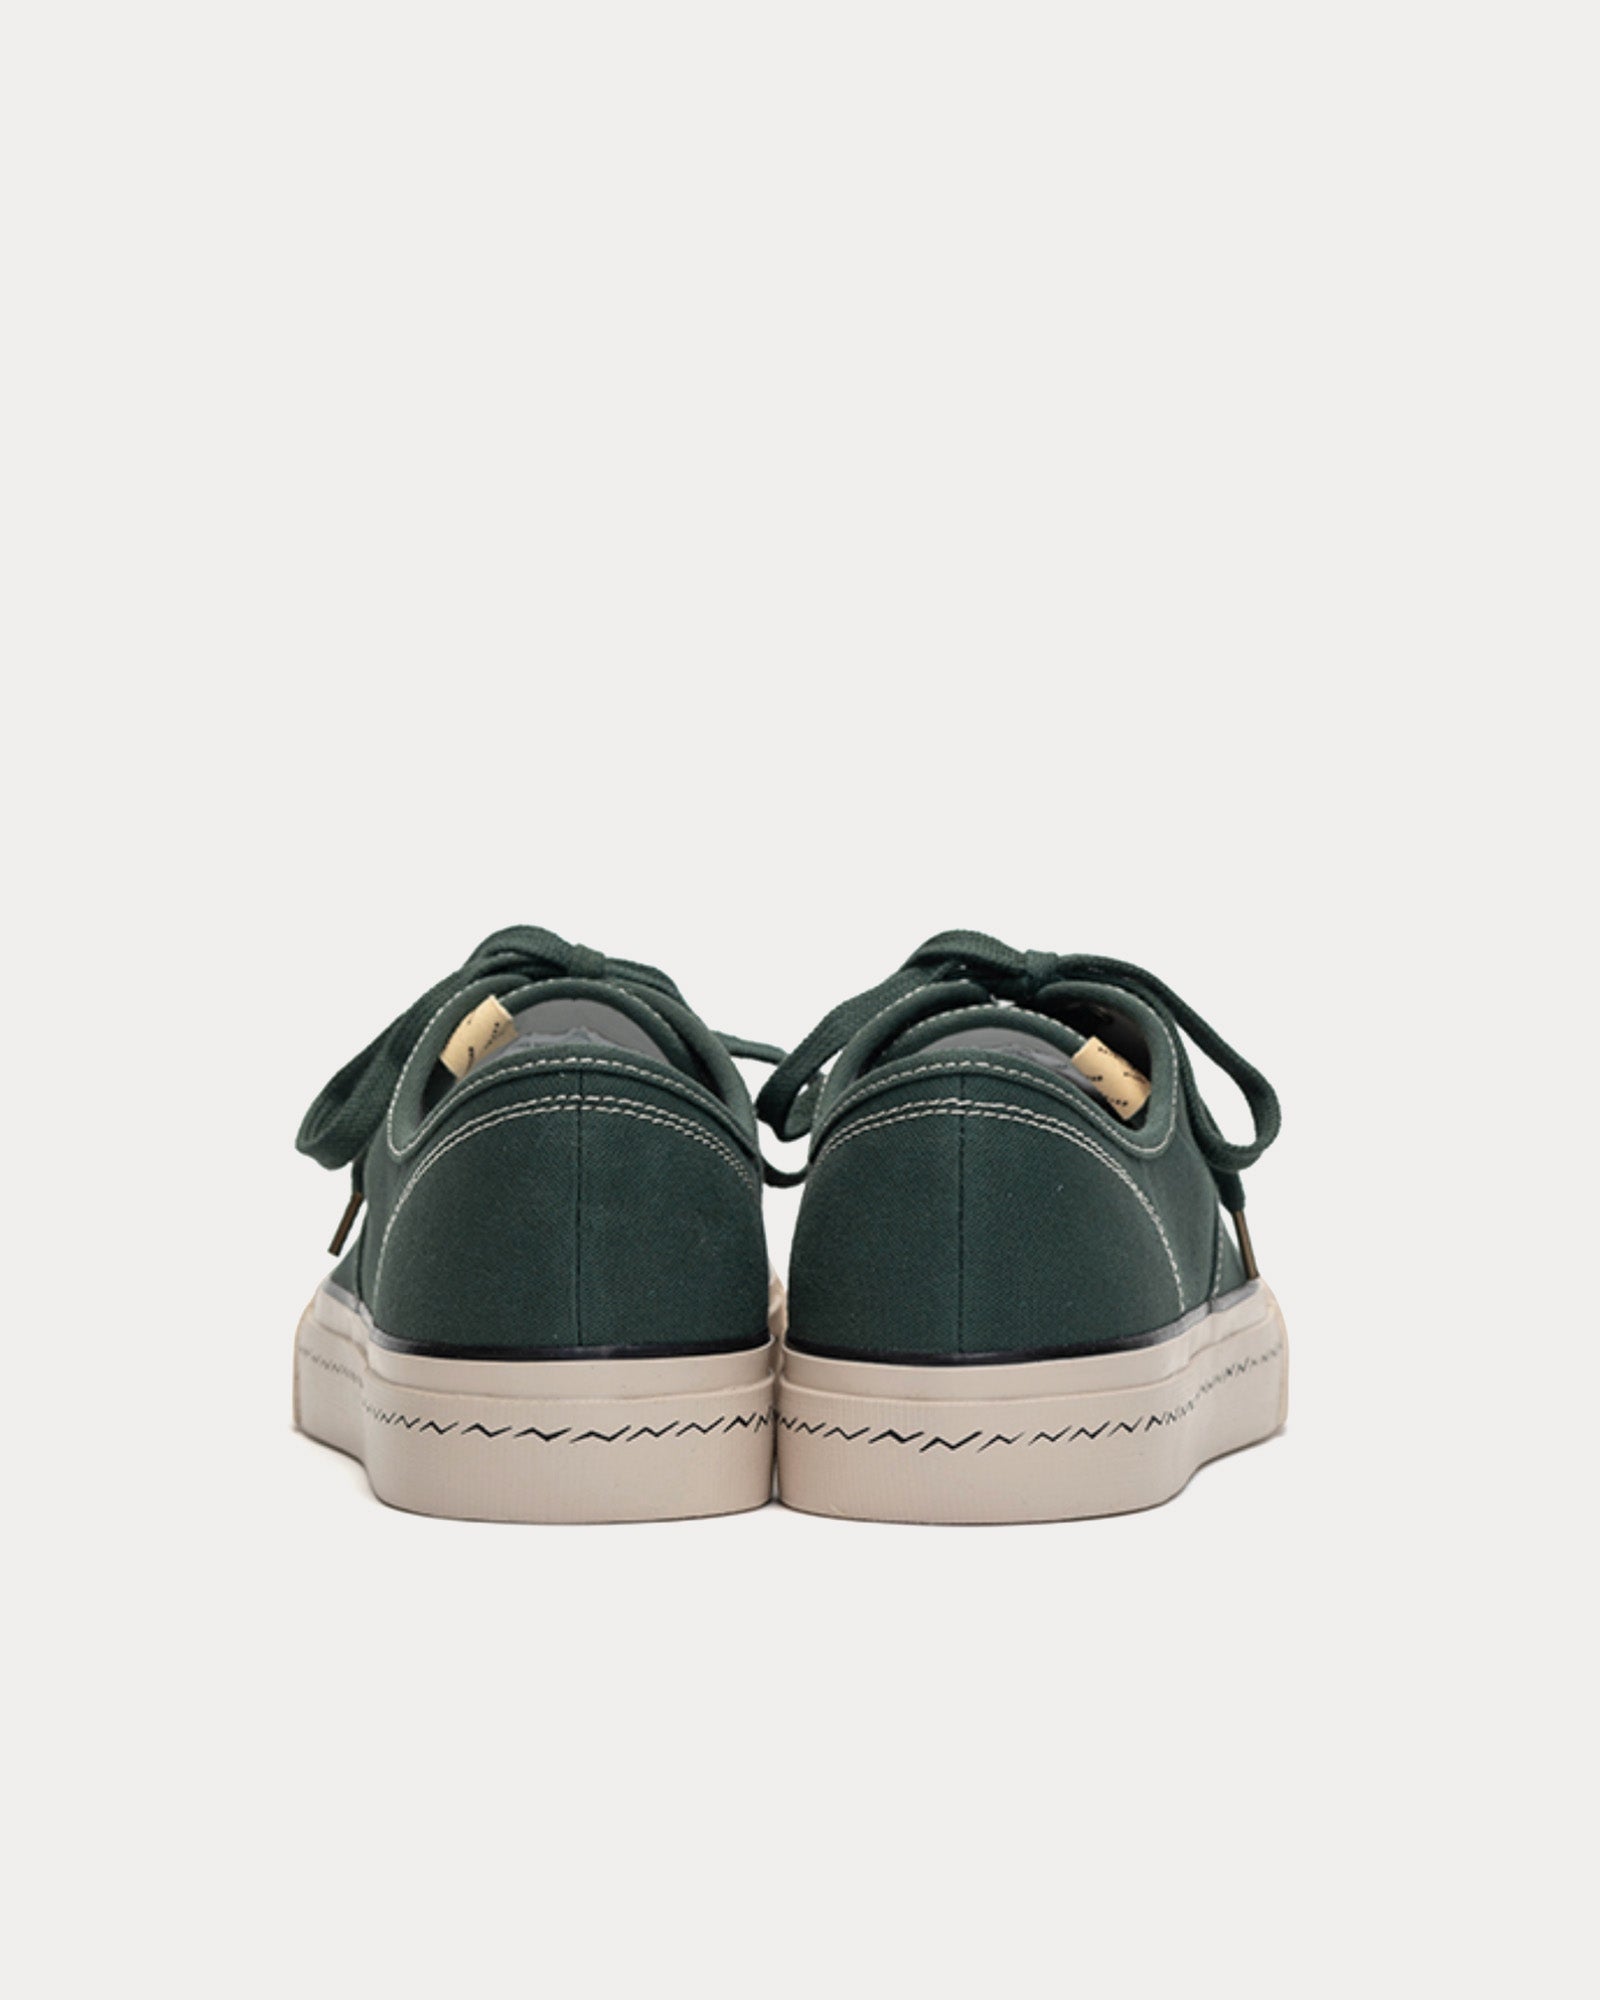 Visvim - Logan Deck Lo Sipe Green Low Top Sneakers